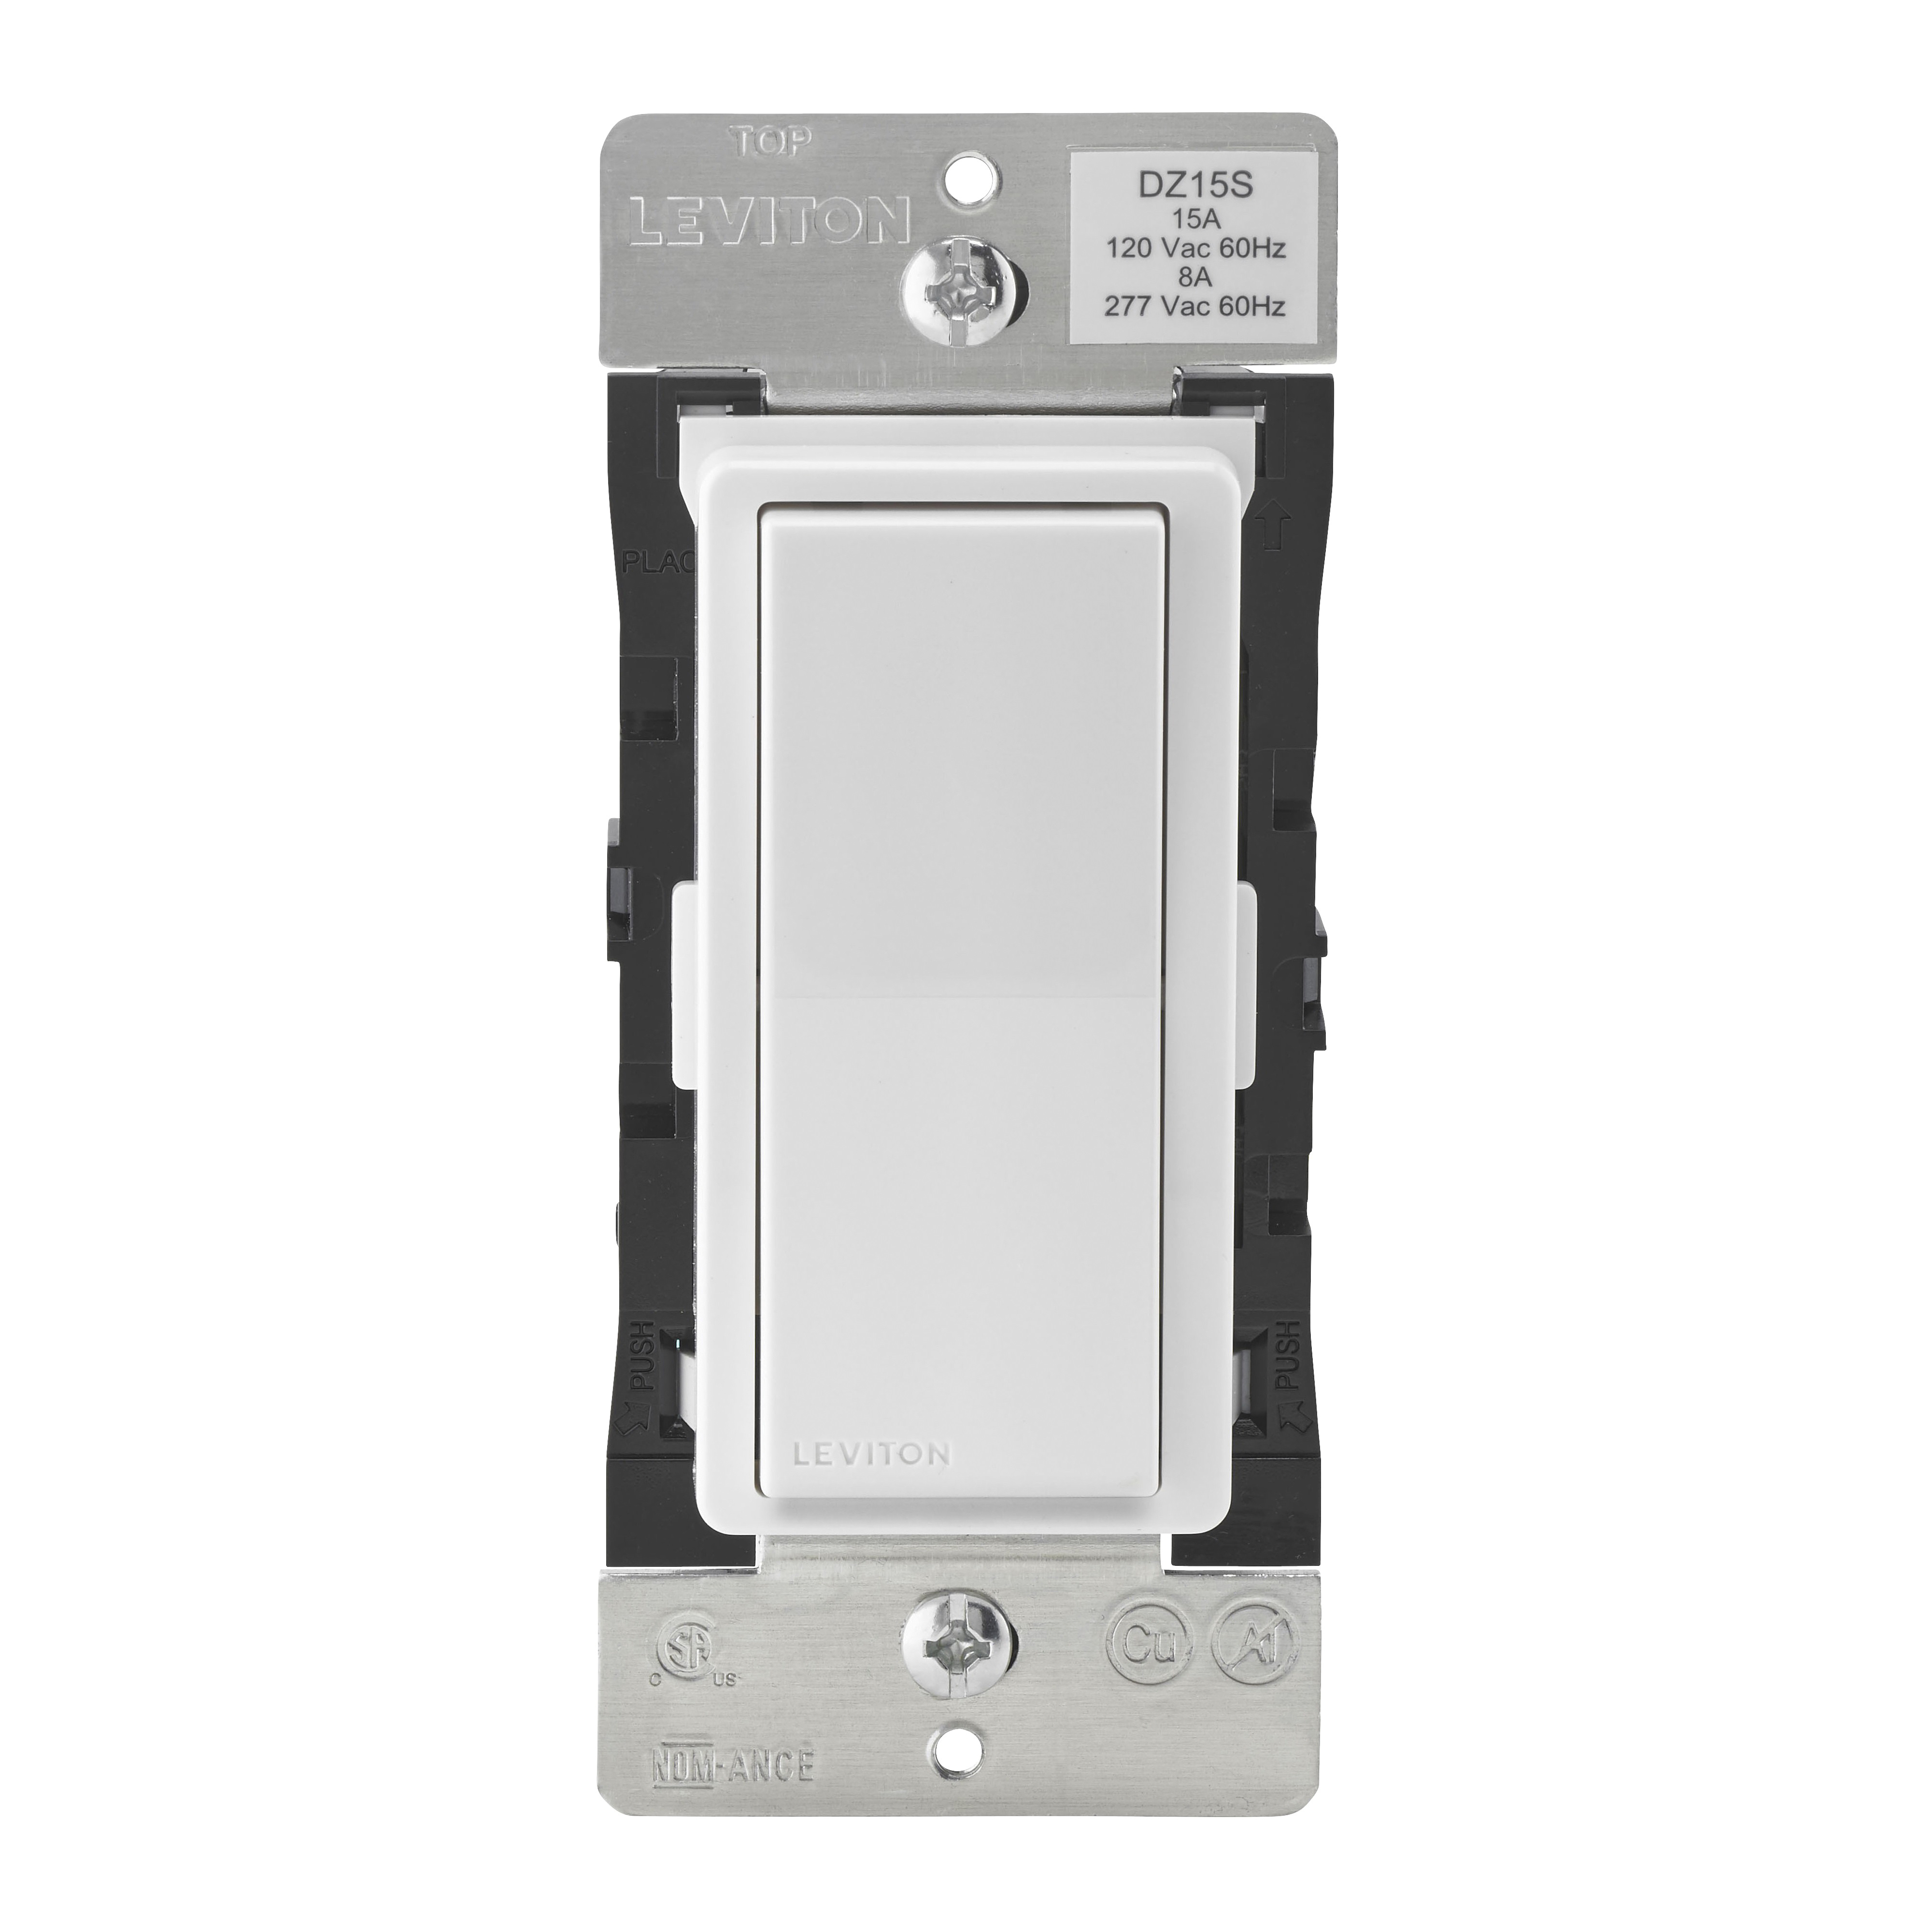 R51-DZ15S-1RZ Switch, 1-Pole, 3-Way, 120 V, 60 Hz, Z-Wave, Hardwired, Light Almond/White